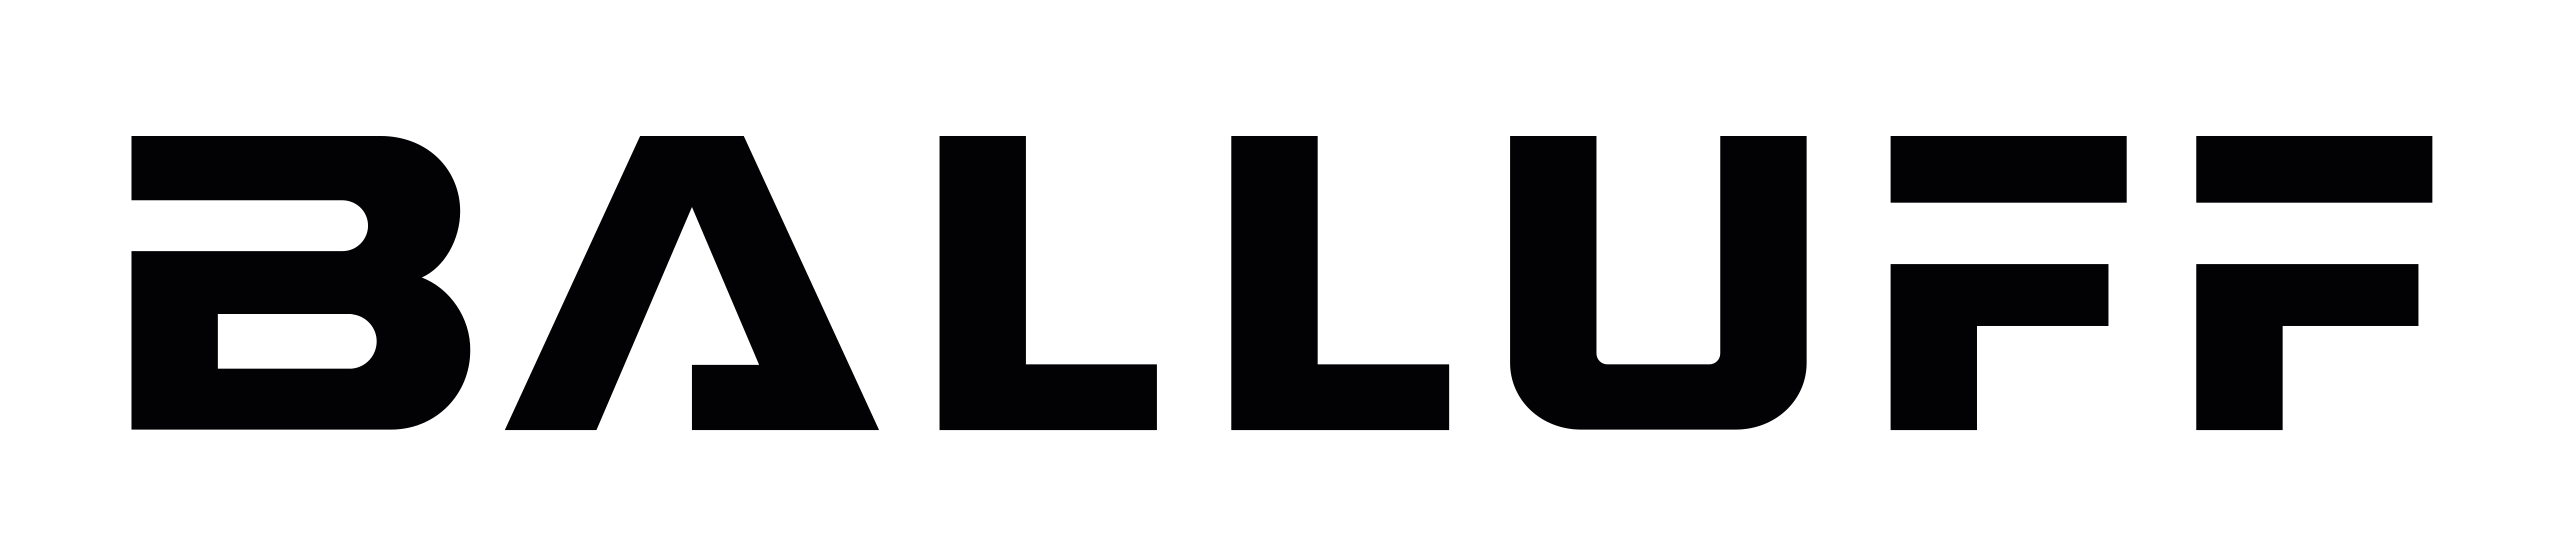 Balluff Logo Wolfram